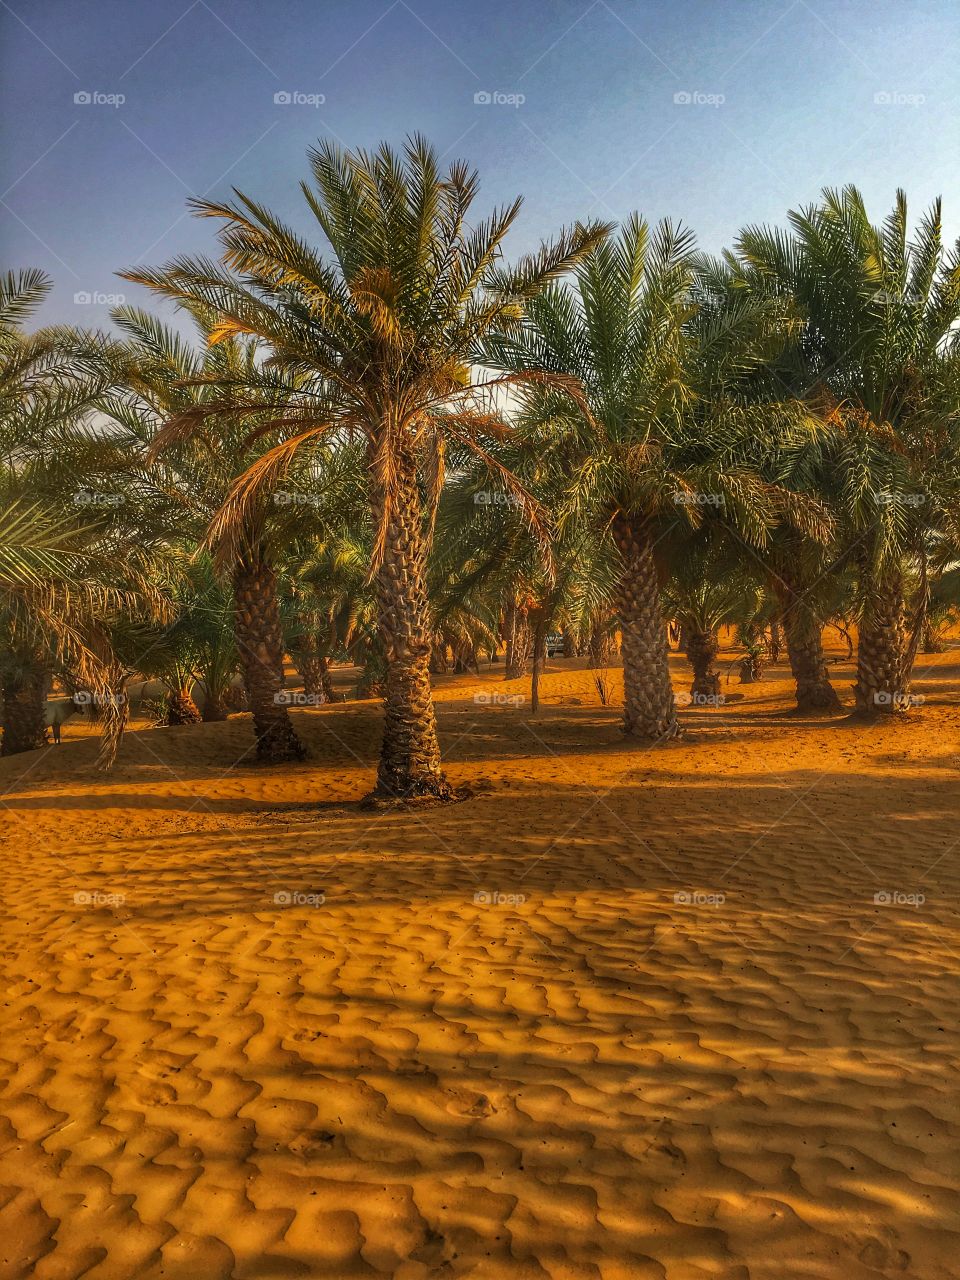 Palm trees in Dubai